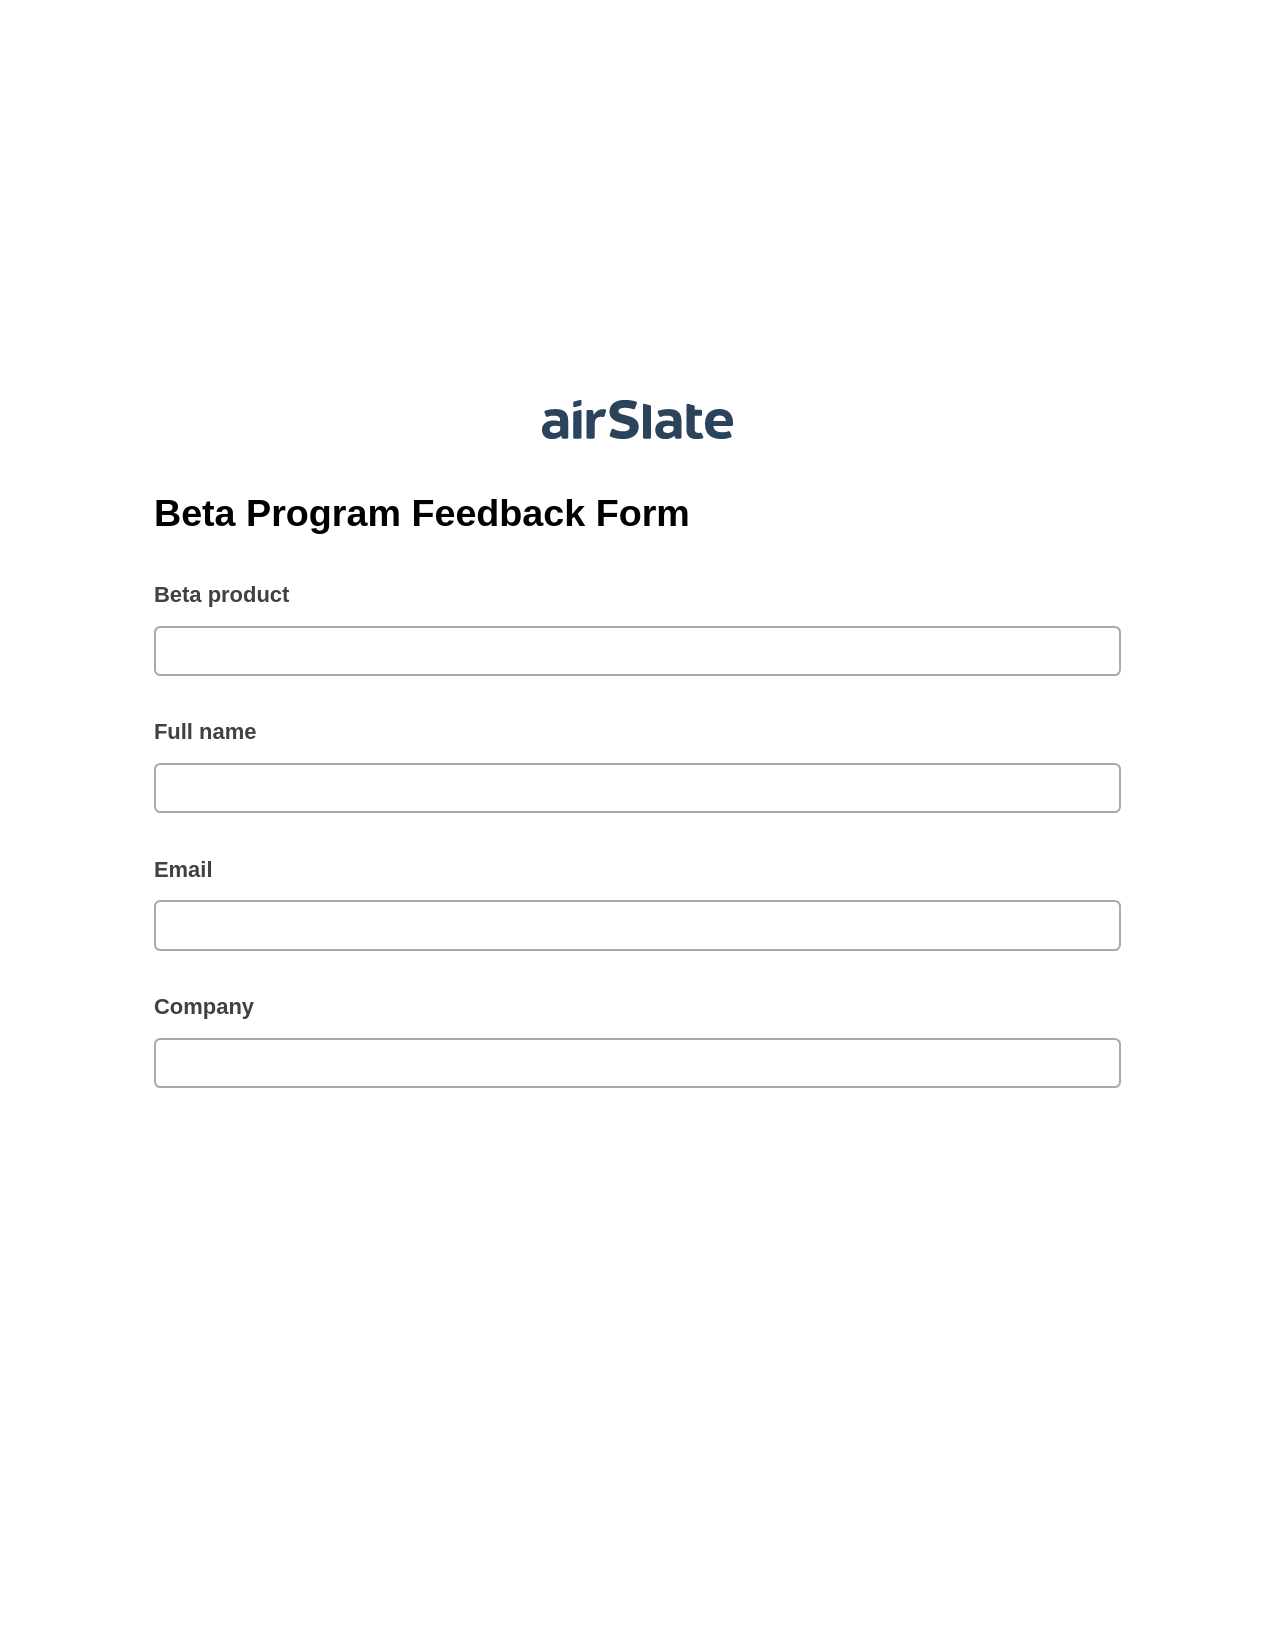 Multirole Beta Program Feedback Form Pre-fill from Salesforce Record Bot, Send a Slate to Salesforce Contact Bot, Export to Salesforce Bot